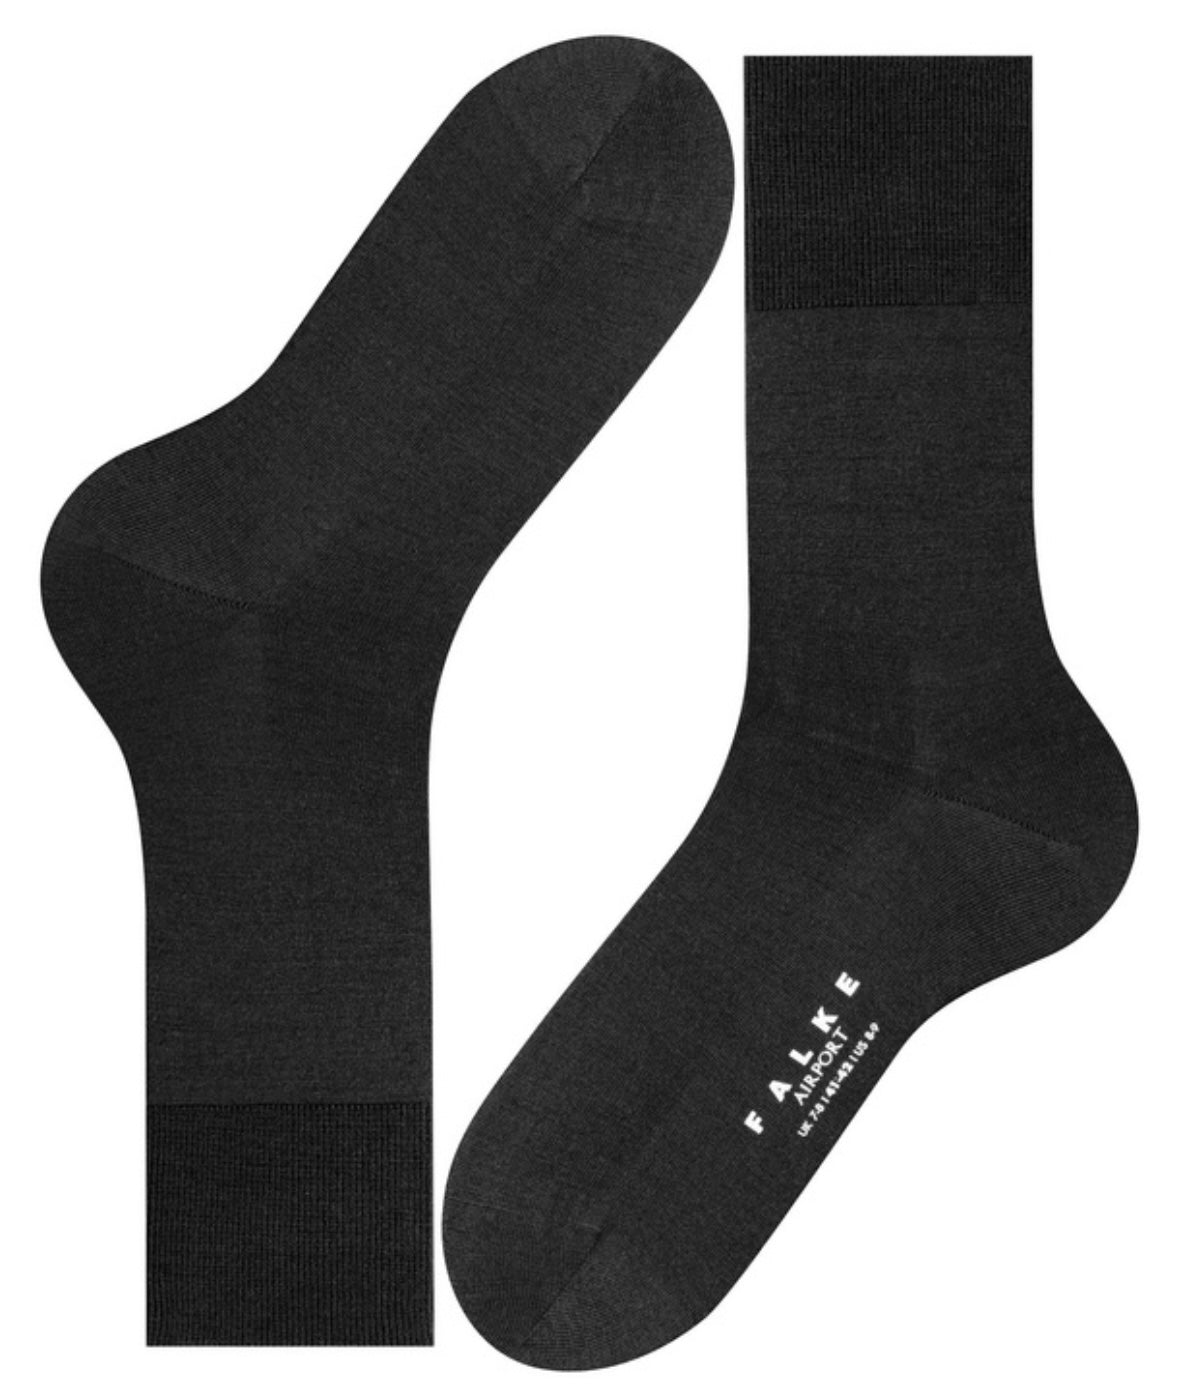 Falke Airport socks - Black